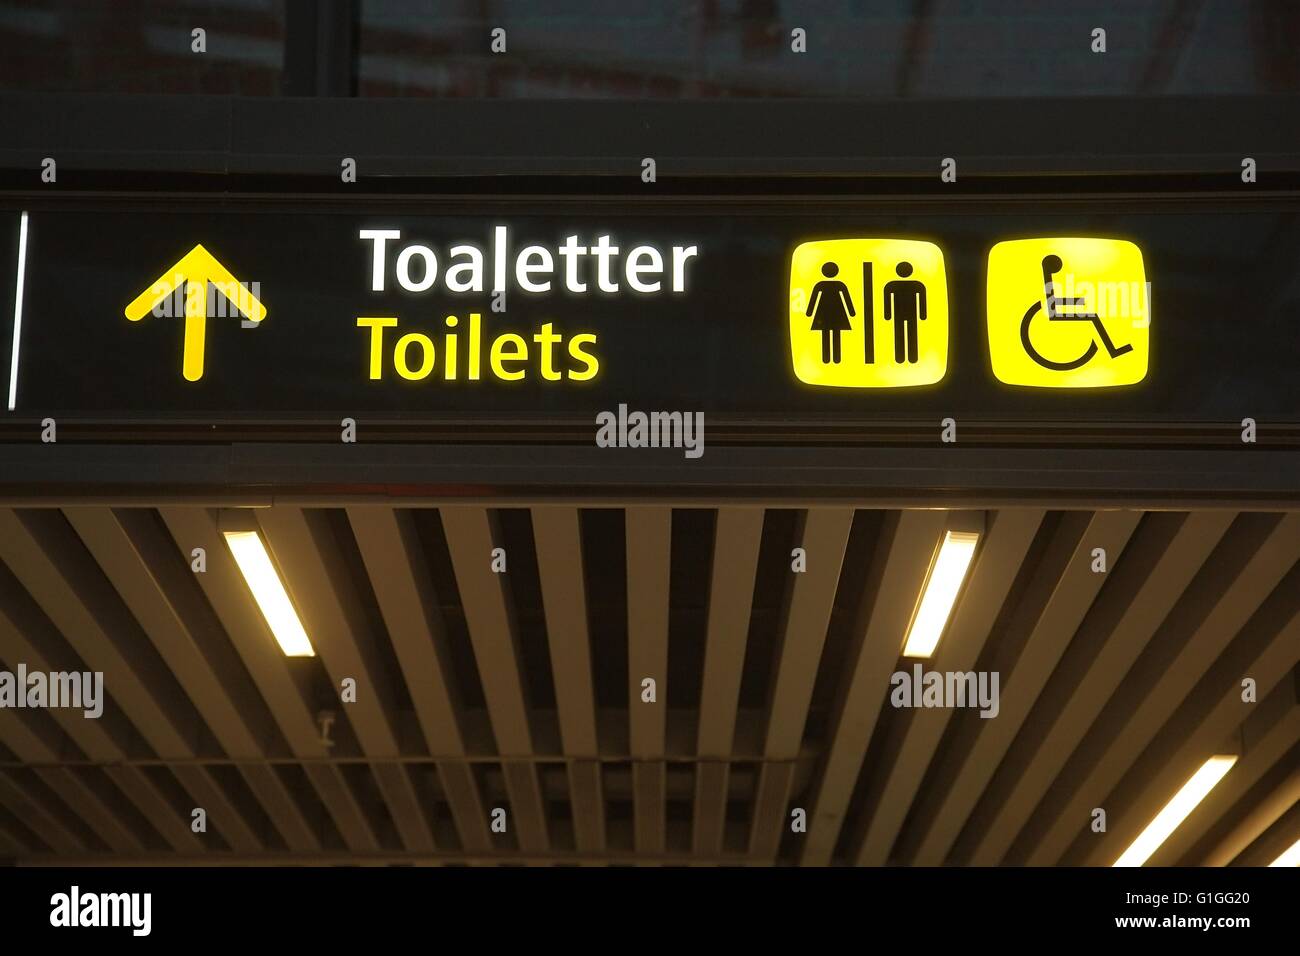 Toilet sign with arrow Stock Photo